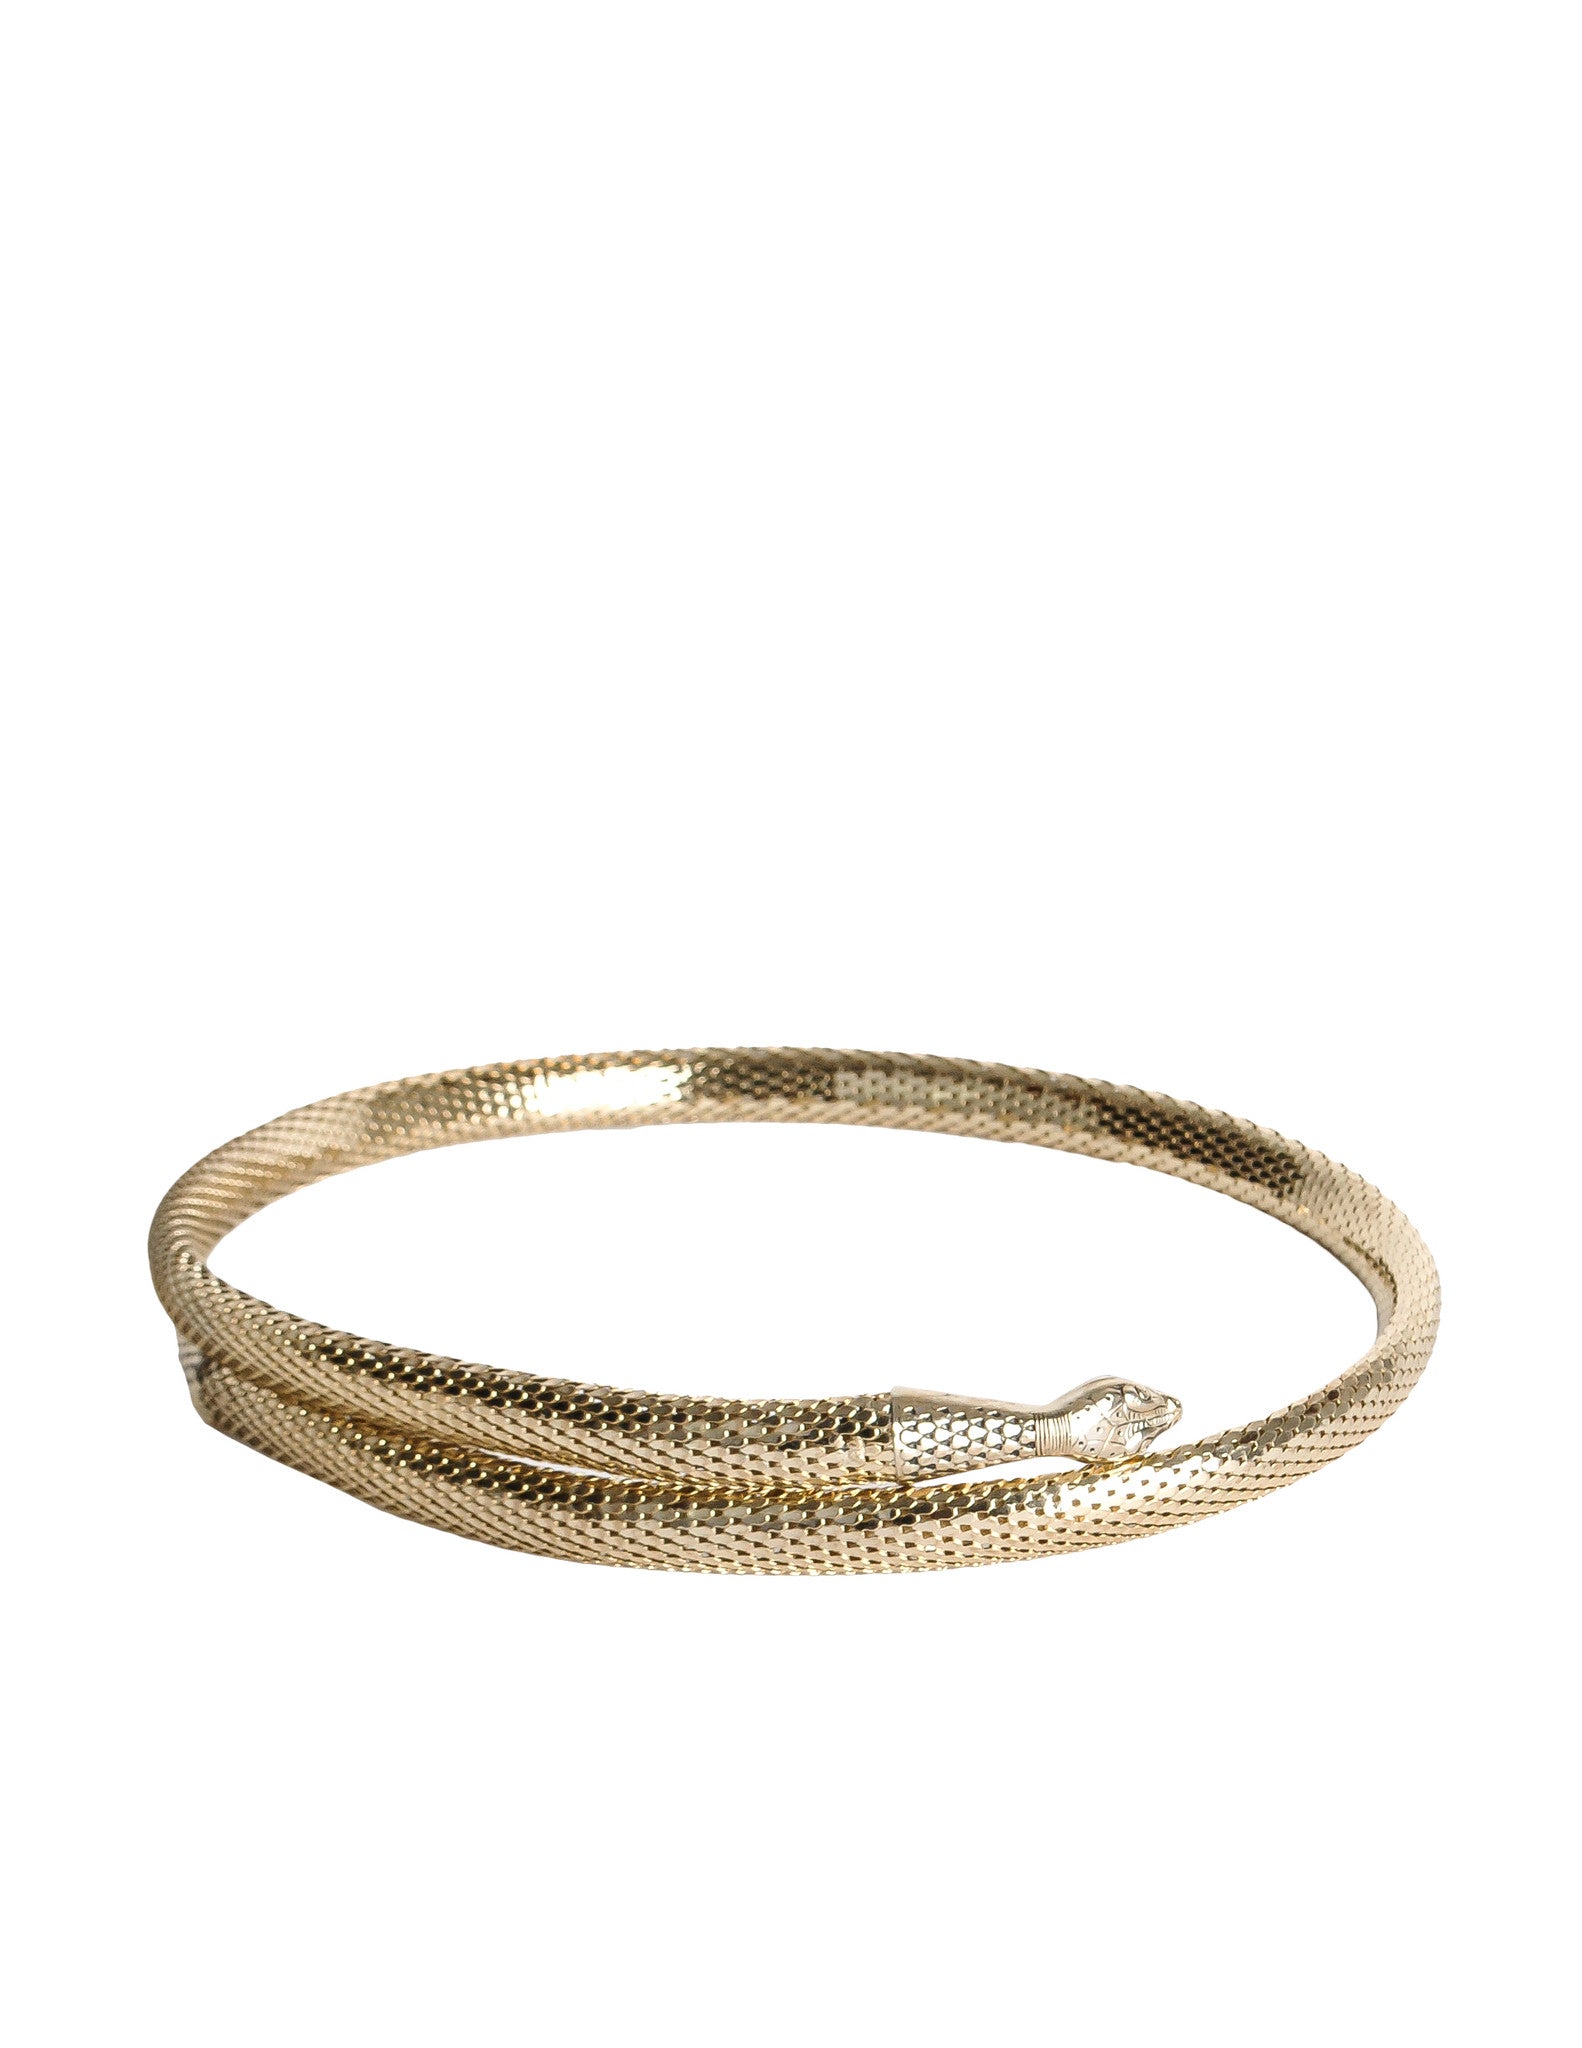 Whiting & Davis Vintage Gold Mesh Snake Belt - Amarcord Vintage Fashion
 - 1